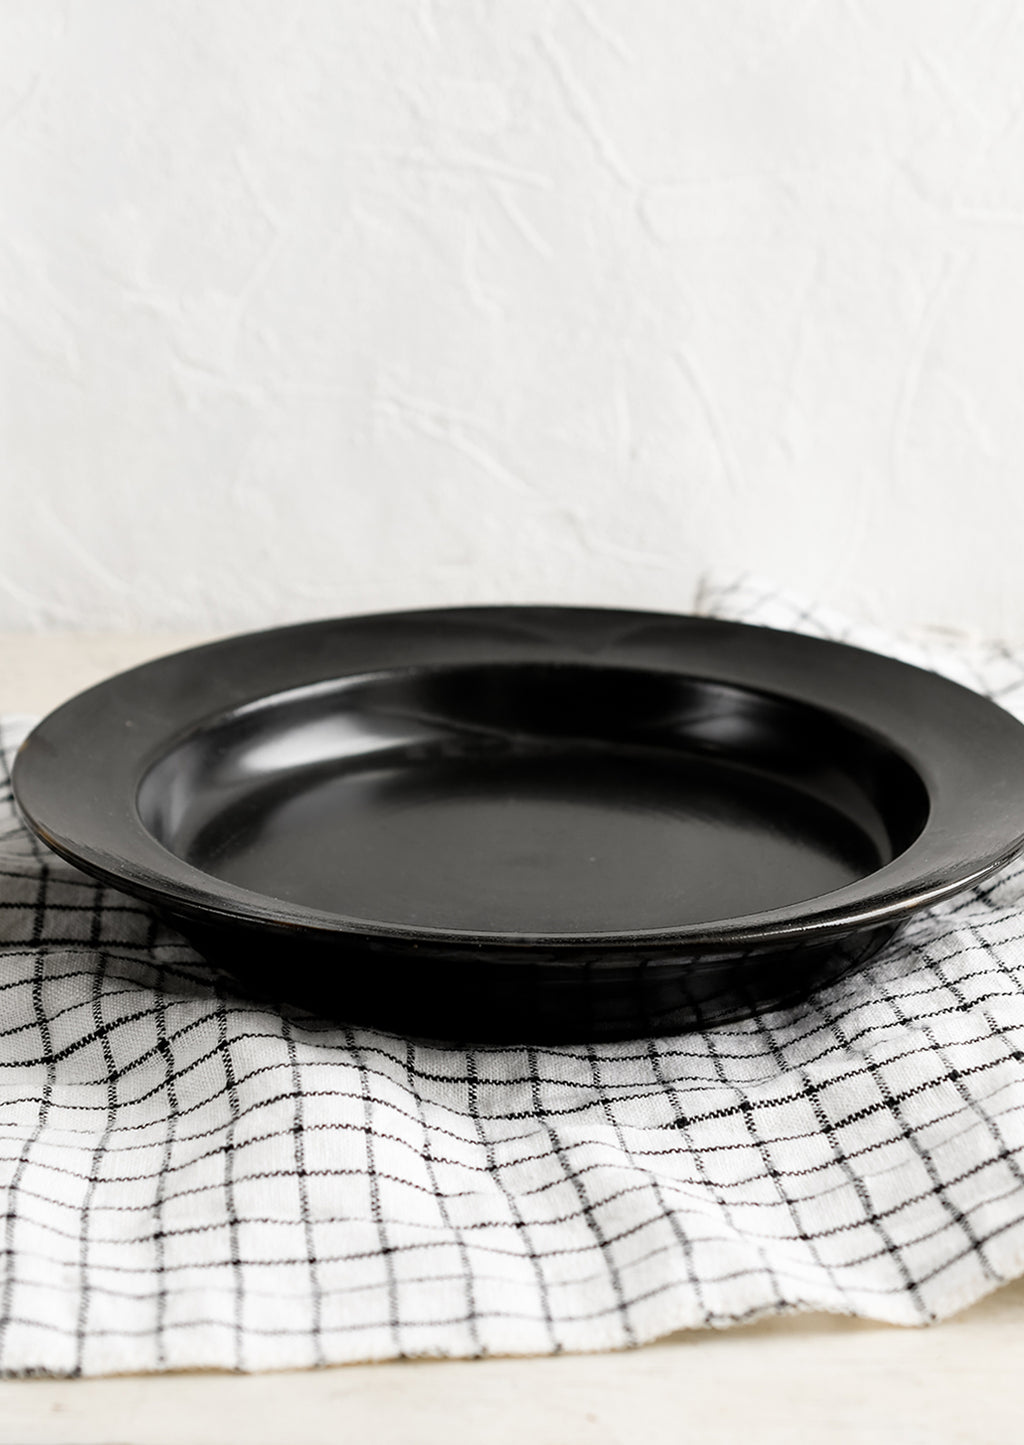 2: A black ceramic pasta plate/bowl.